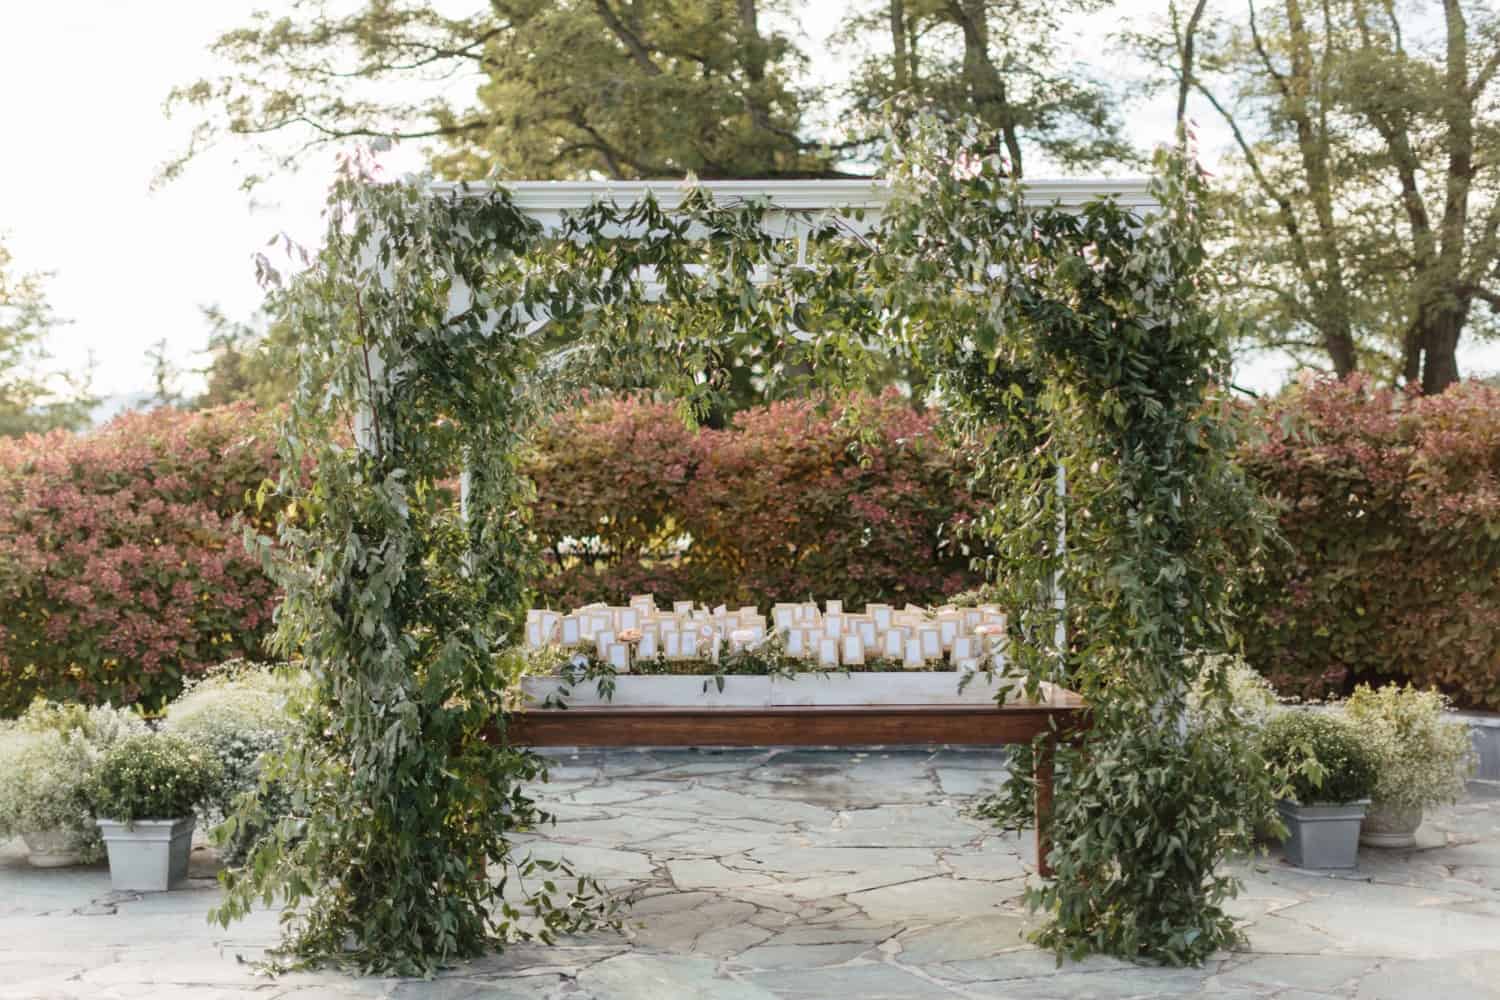 Apotheca Flowers at Basin Harbor wedding - Vermont Wedding Photographers